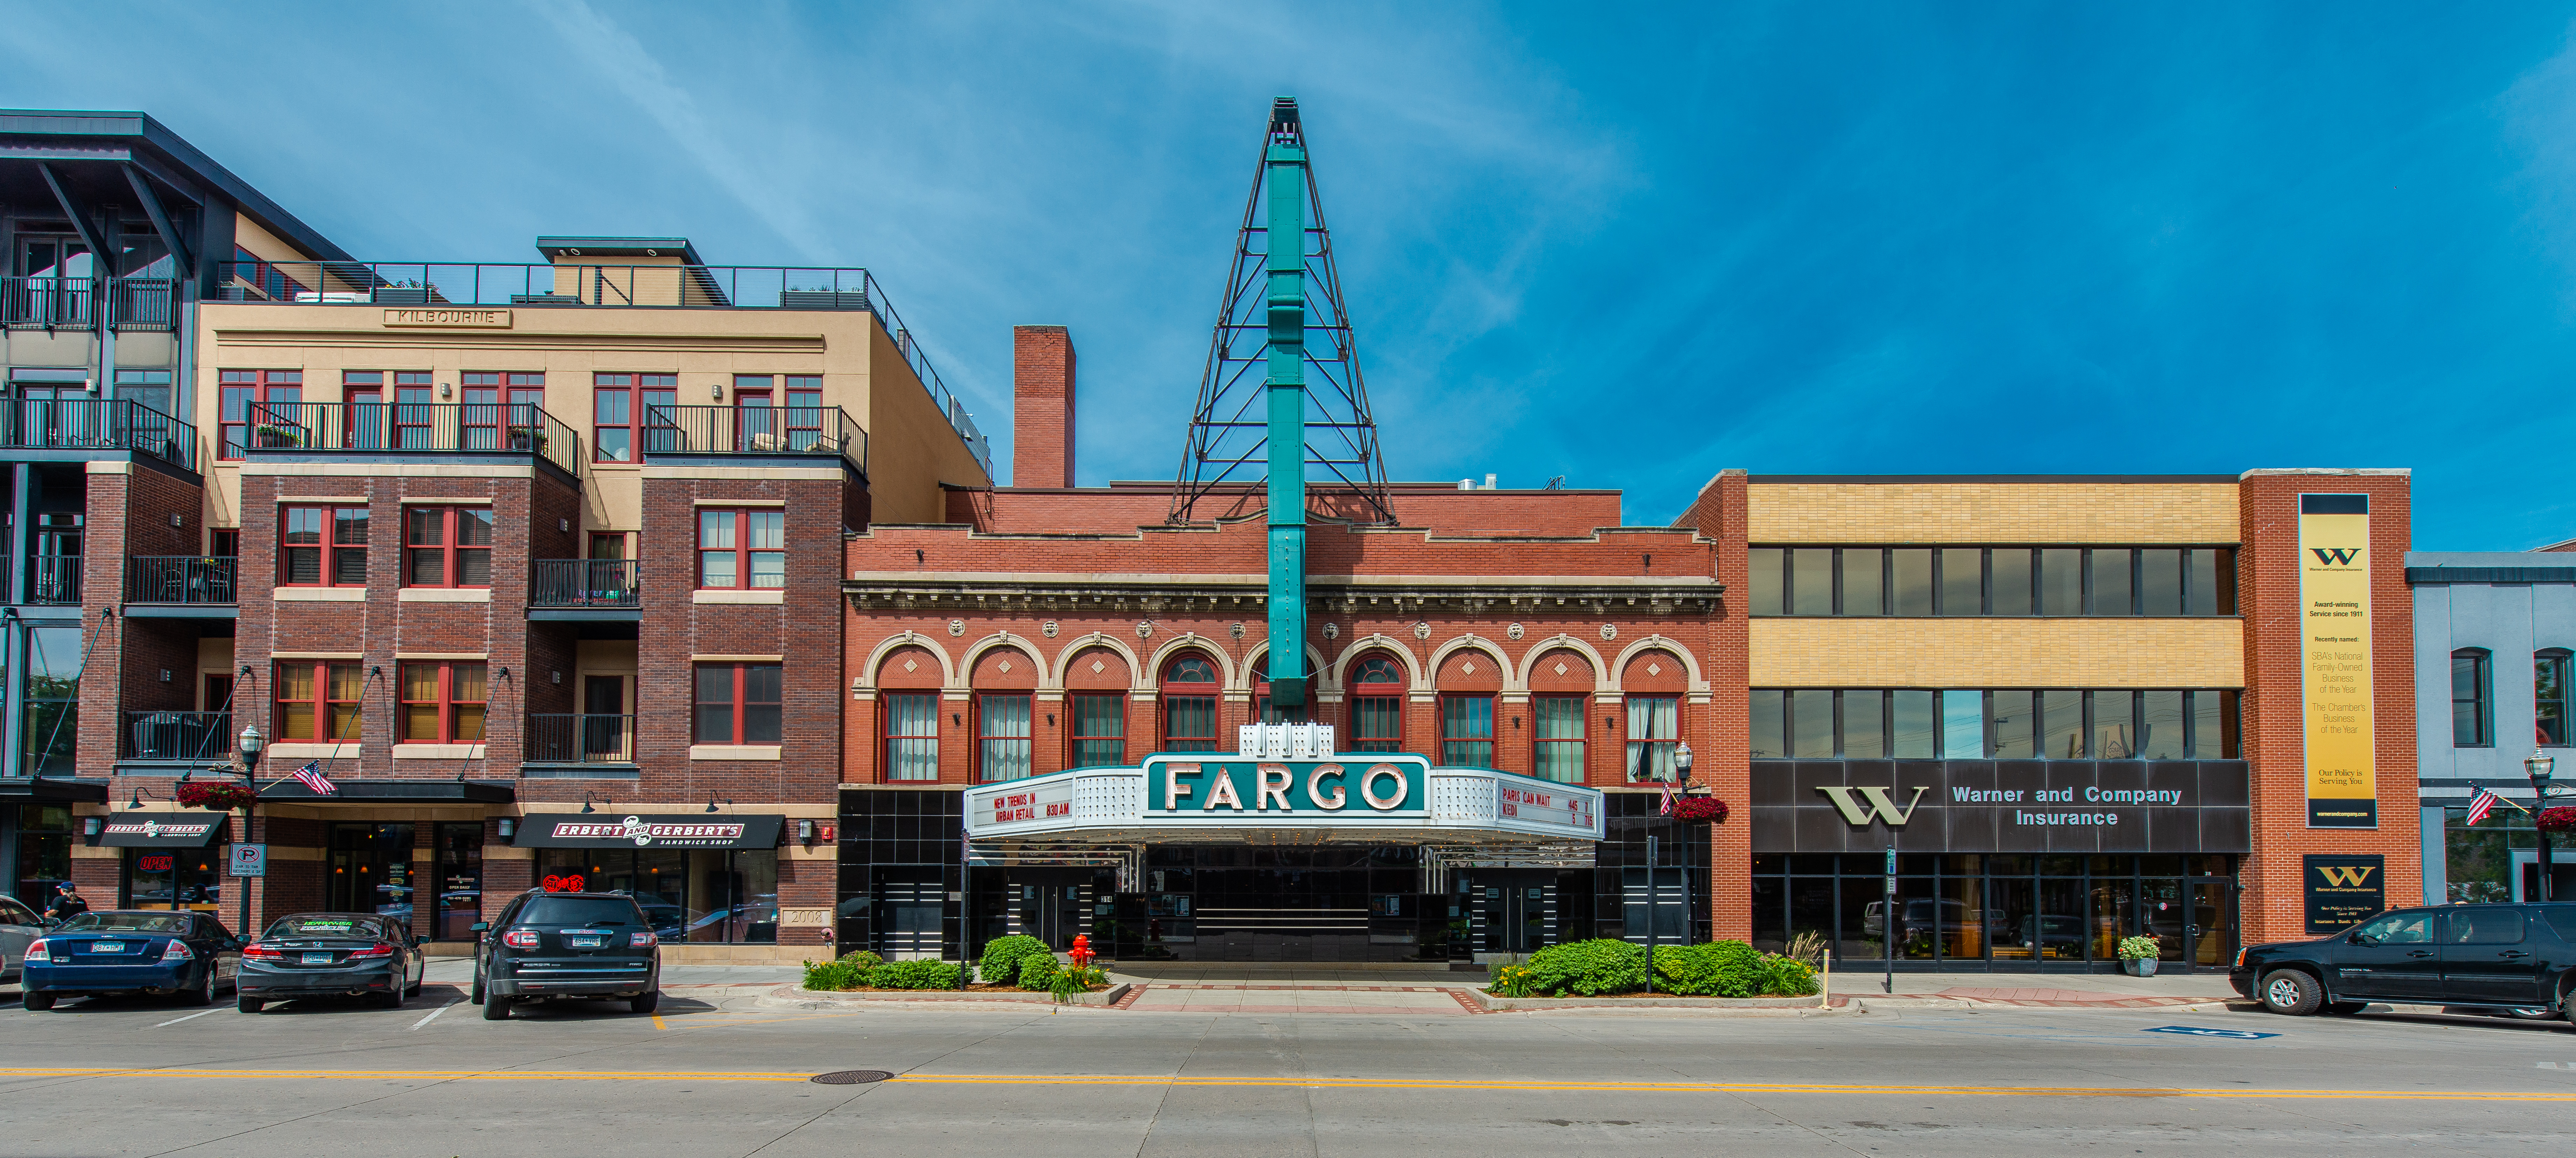 Fargo Theater and street view in Fargo North Dakota